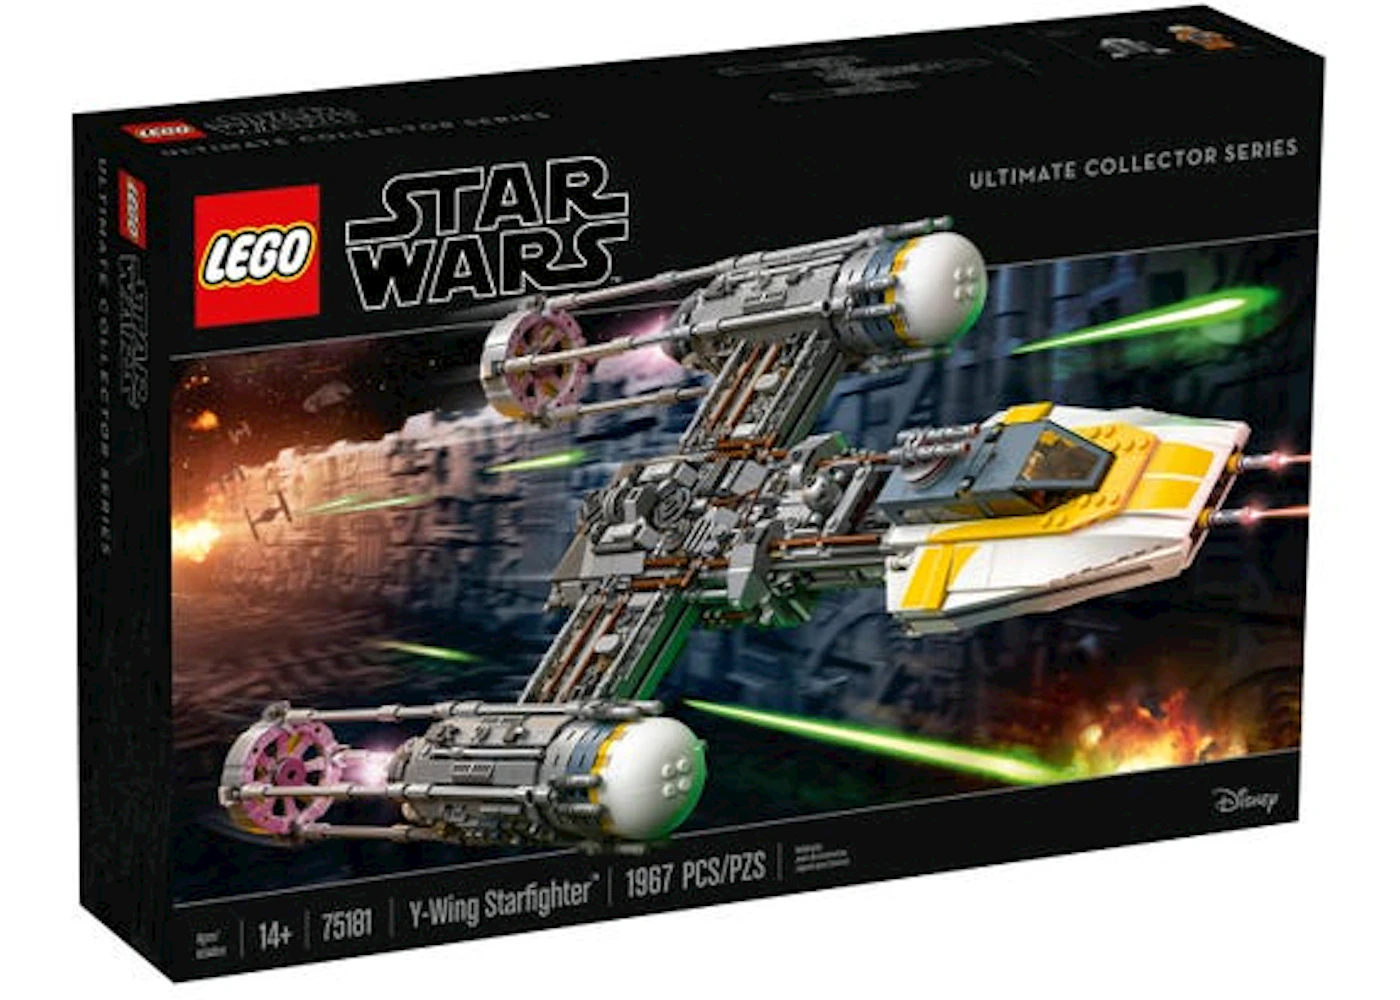 hældning malt grundigt LEGO Star Wars Ultimate Collector Series Y-wing Starfighter Set 75181 - US